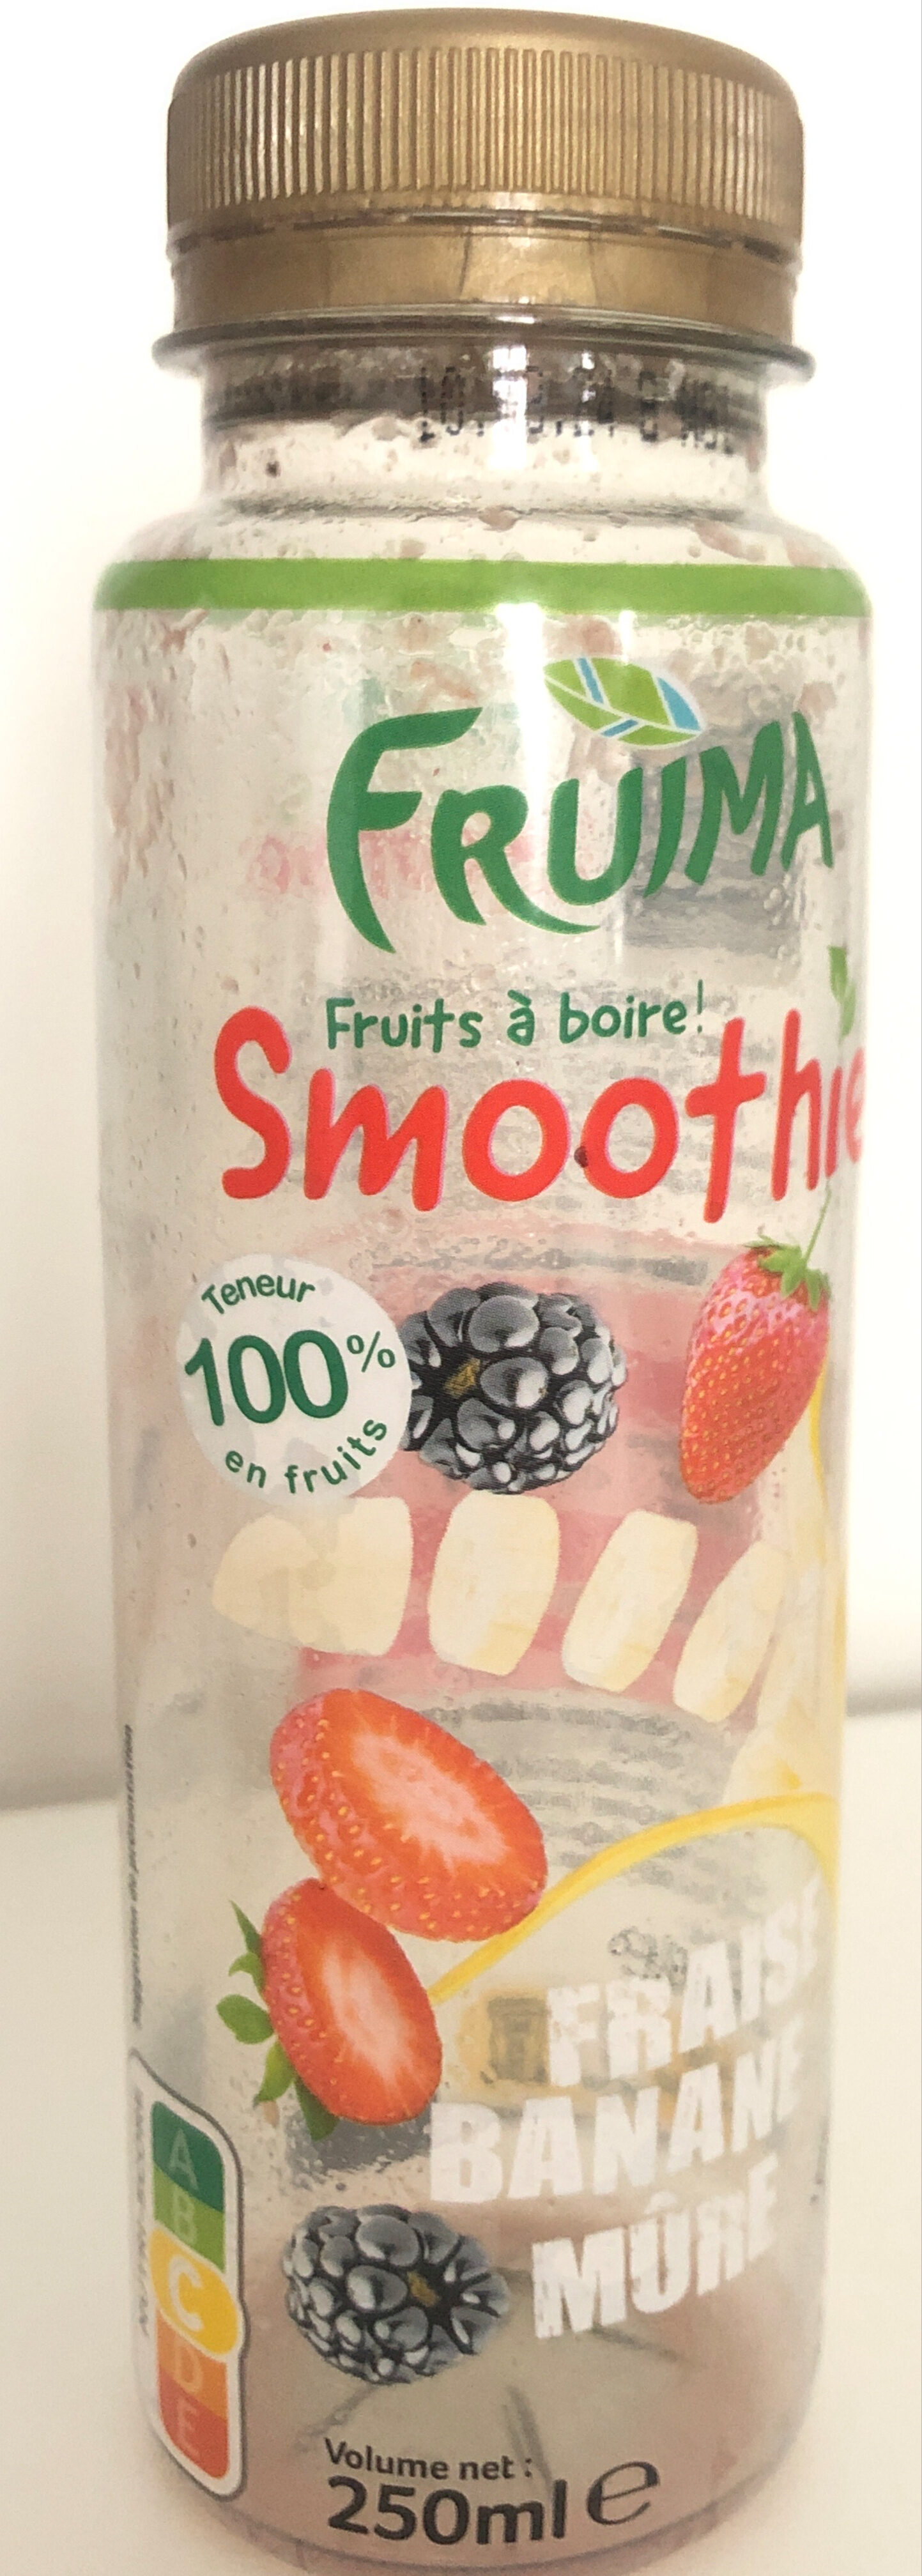 Smoothie fraise banane mûre - Produit